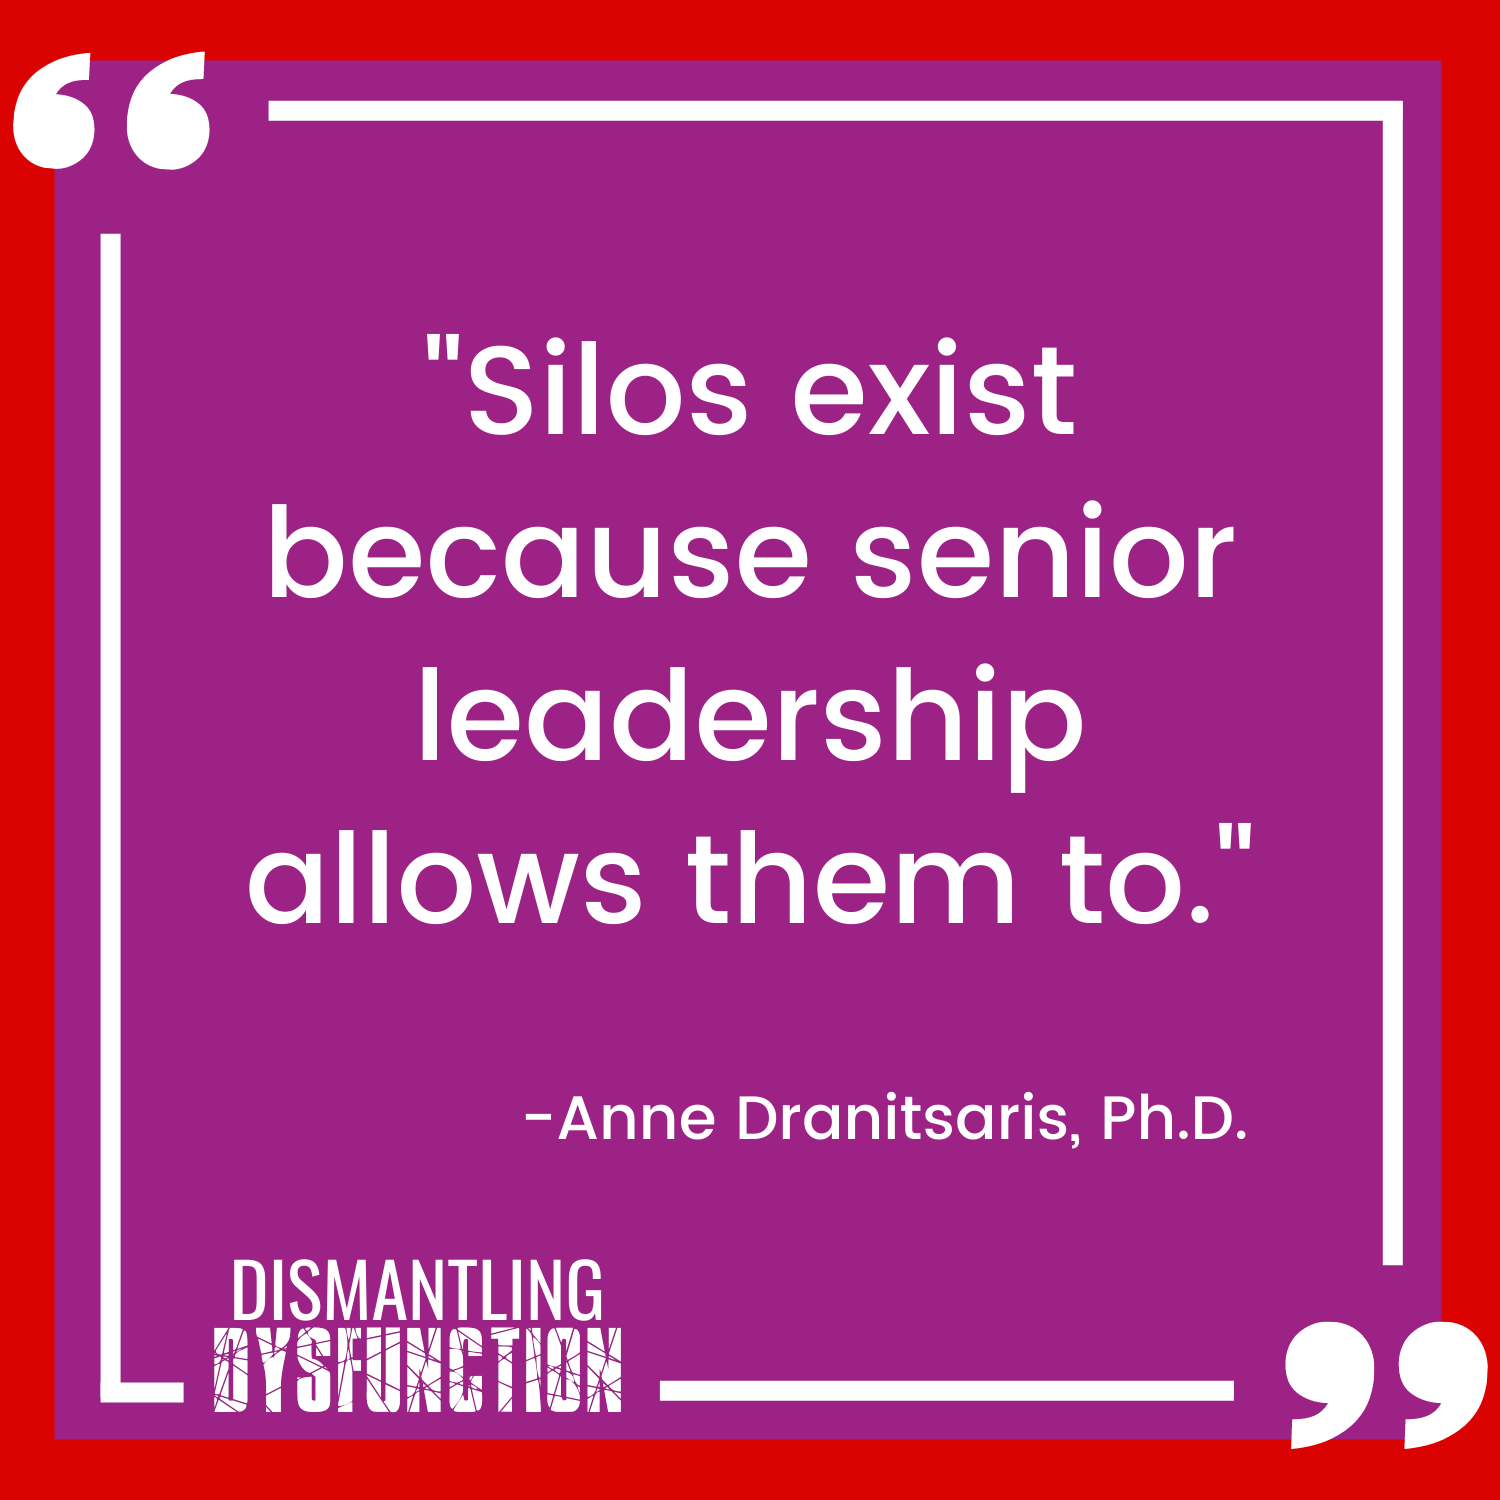 "Silos exist because senior leadership allows them to."